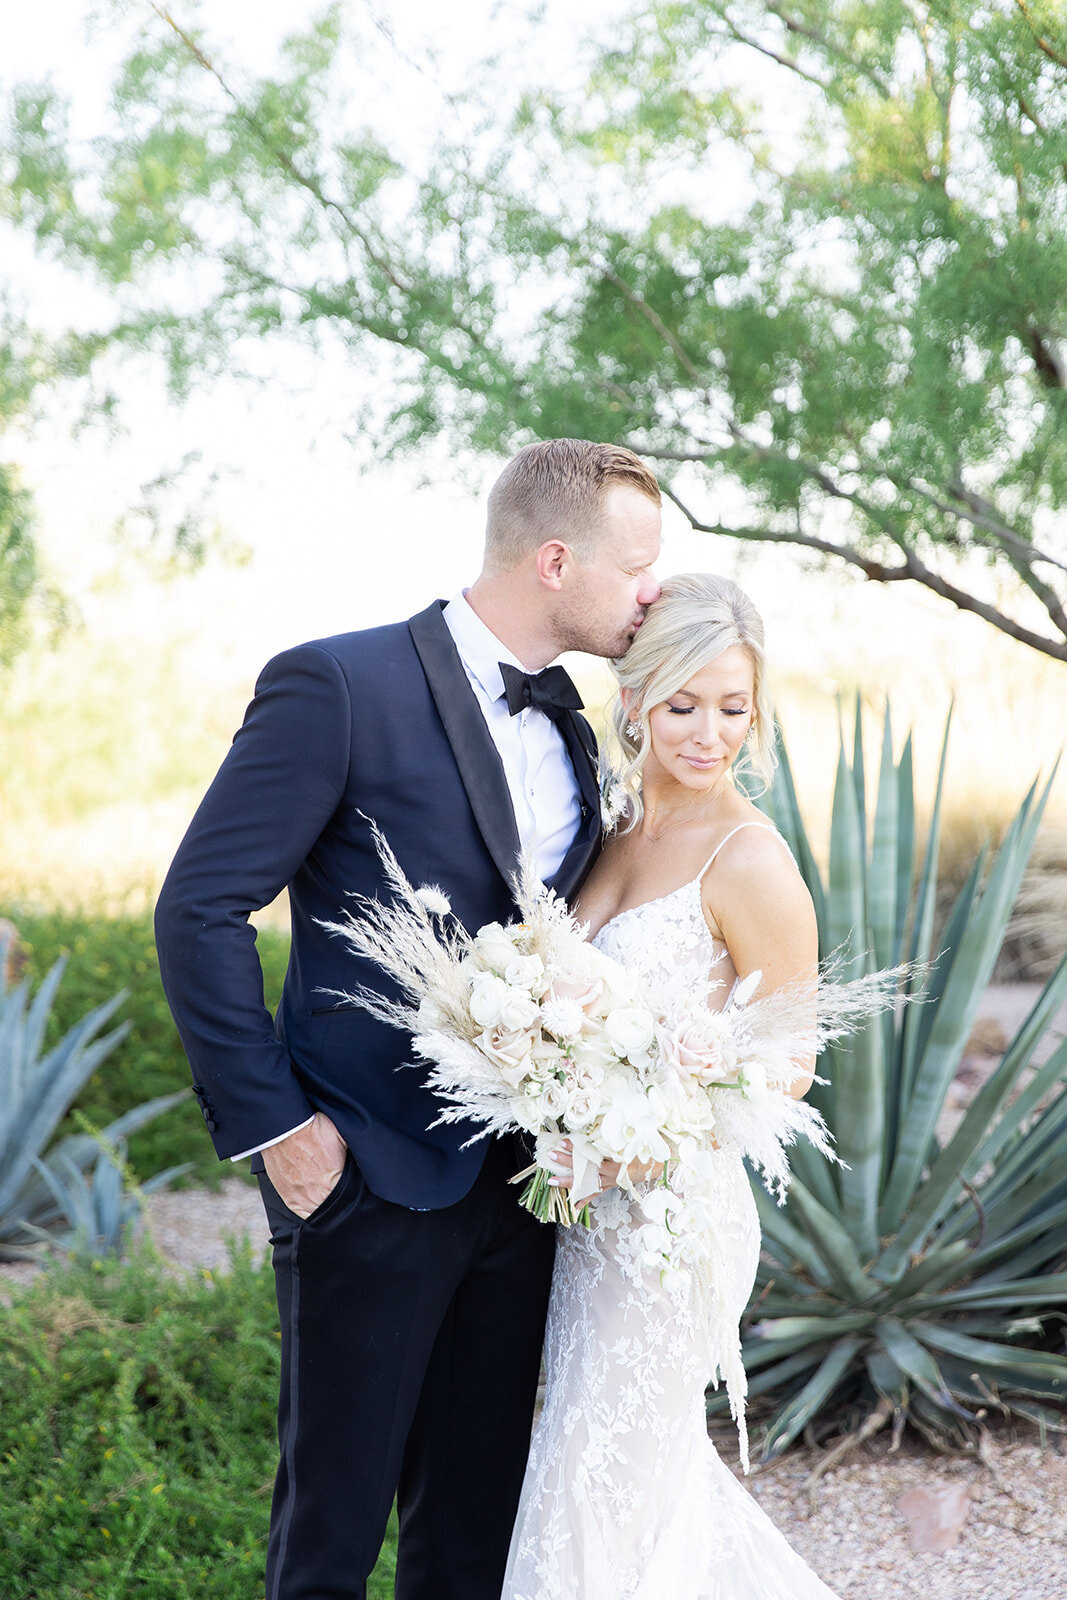 Karlie Colleen Photography - Ashley & Grant Wedding - The Paseo - Phoenix Arizona-678